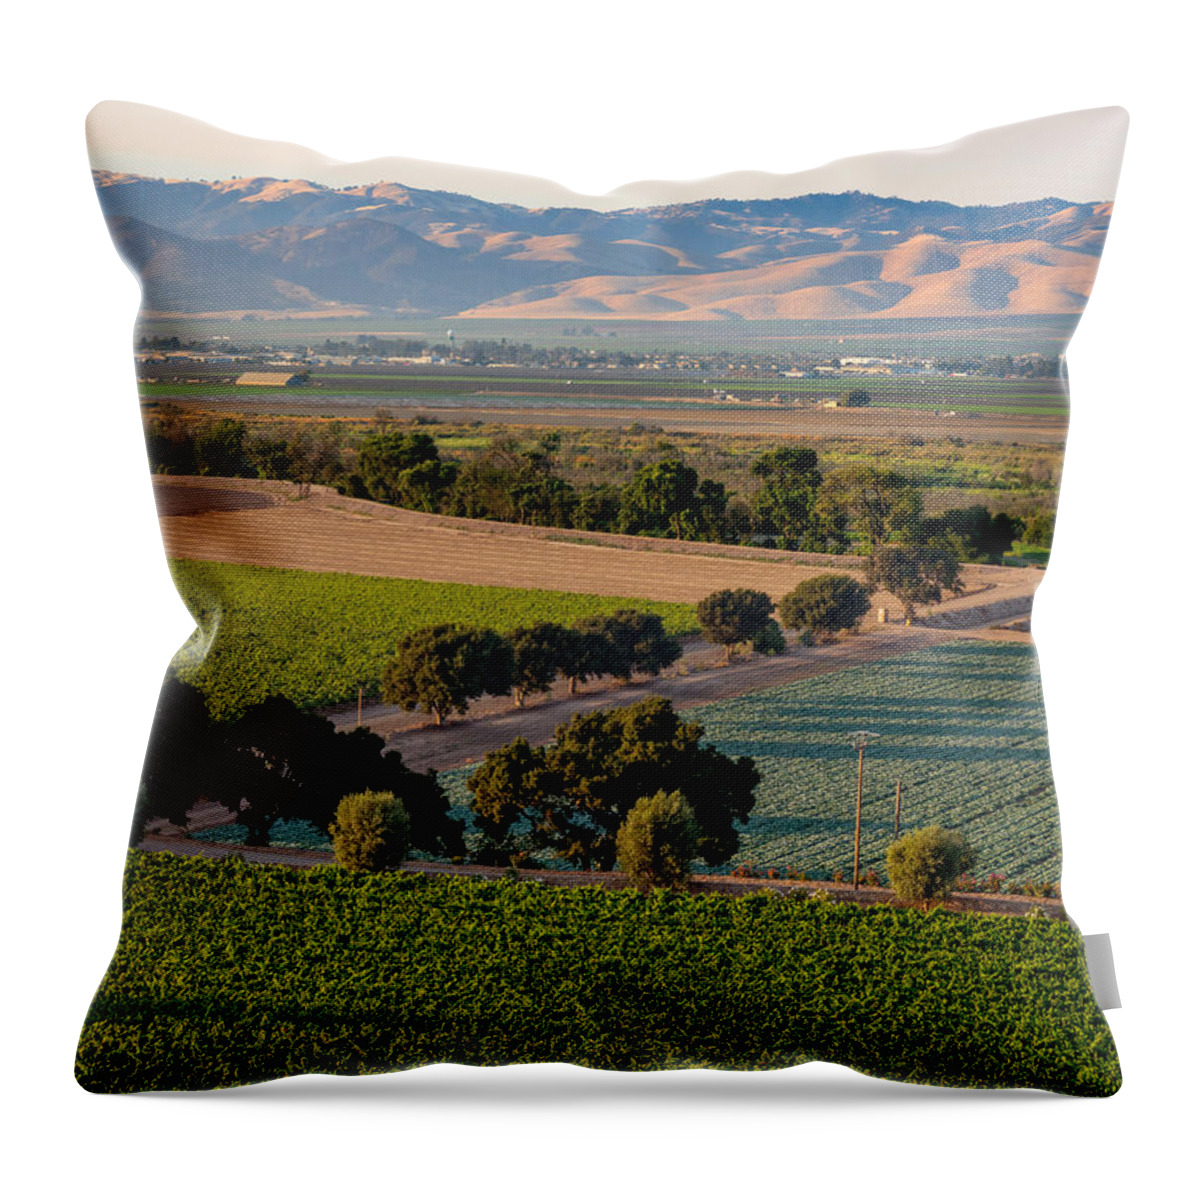 Sunset Throw Pillow featuring the photograph Sunset in Salinas Valley by Derek Dean